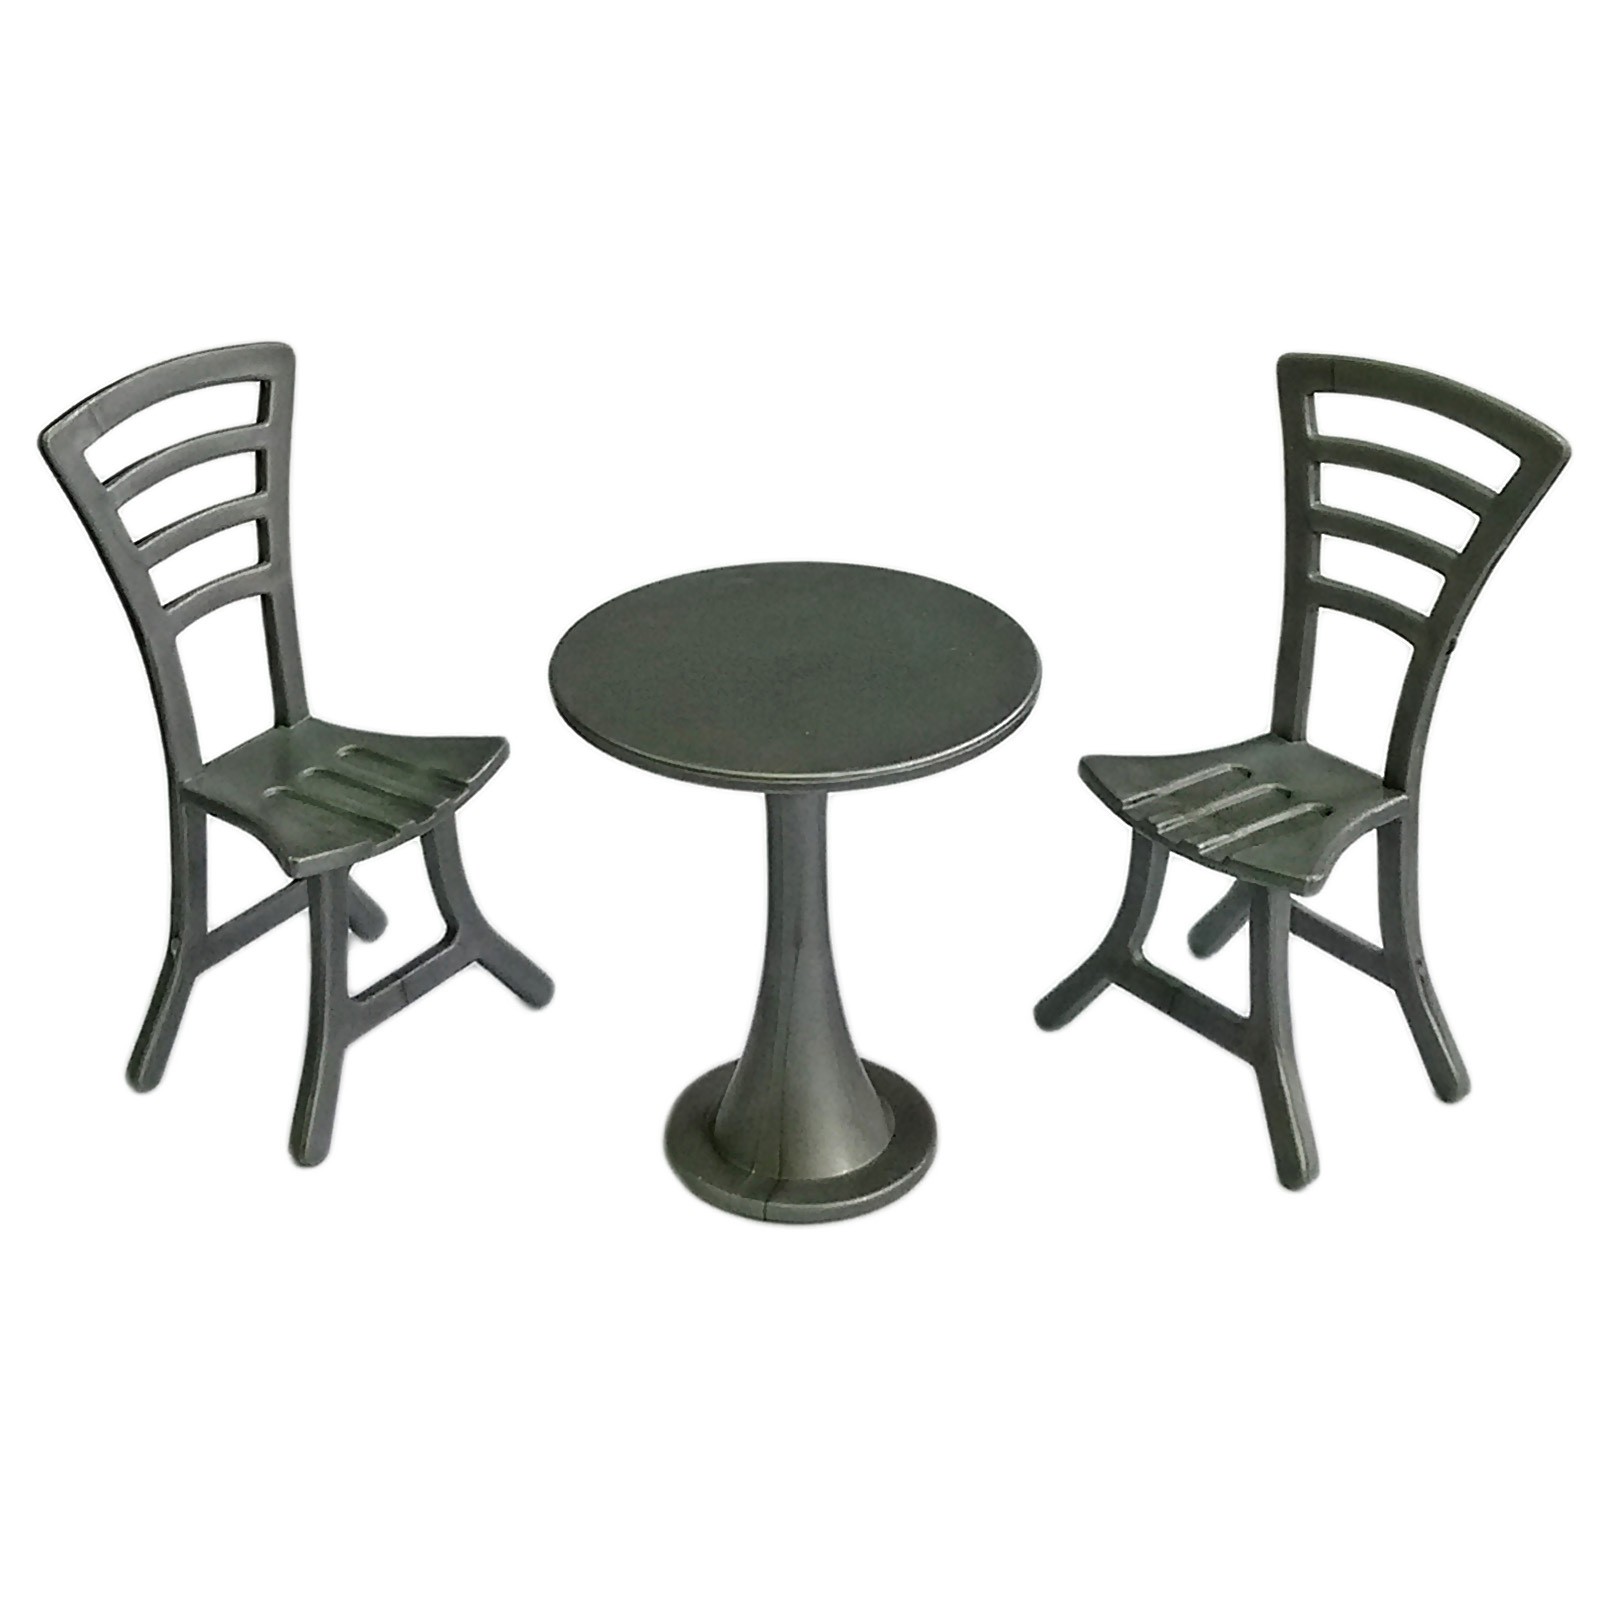 Outdoor Garden Tea Coffee Table Chairs, Outdoor Dollhouse Furniture